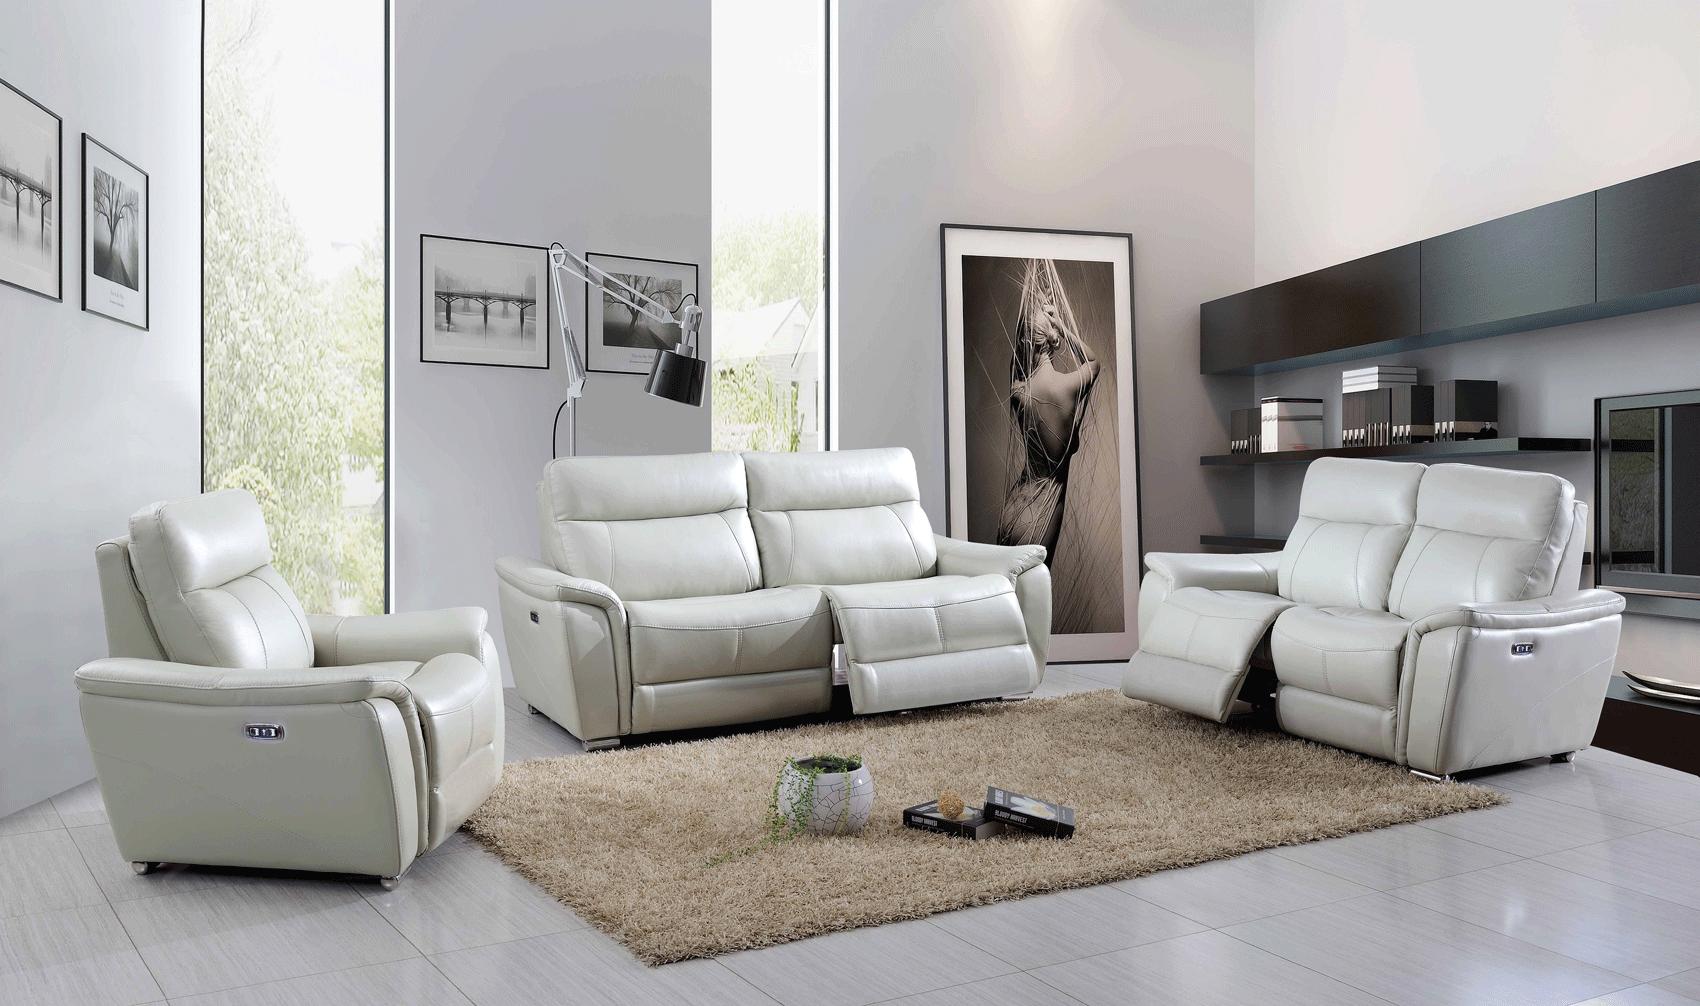 

    
Light Grey Top Grain Leather Electric Recliner Sofa Set 3Pcs Contemporary ESF 1705
